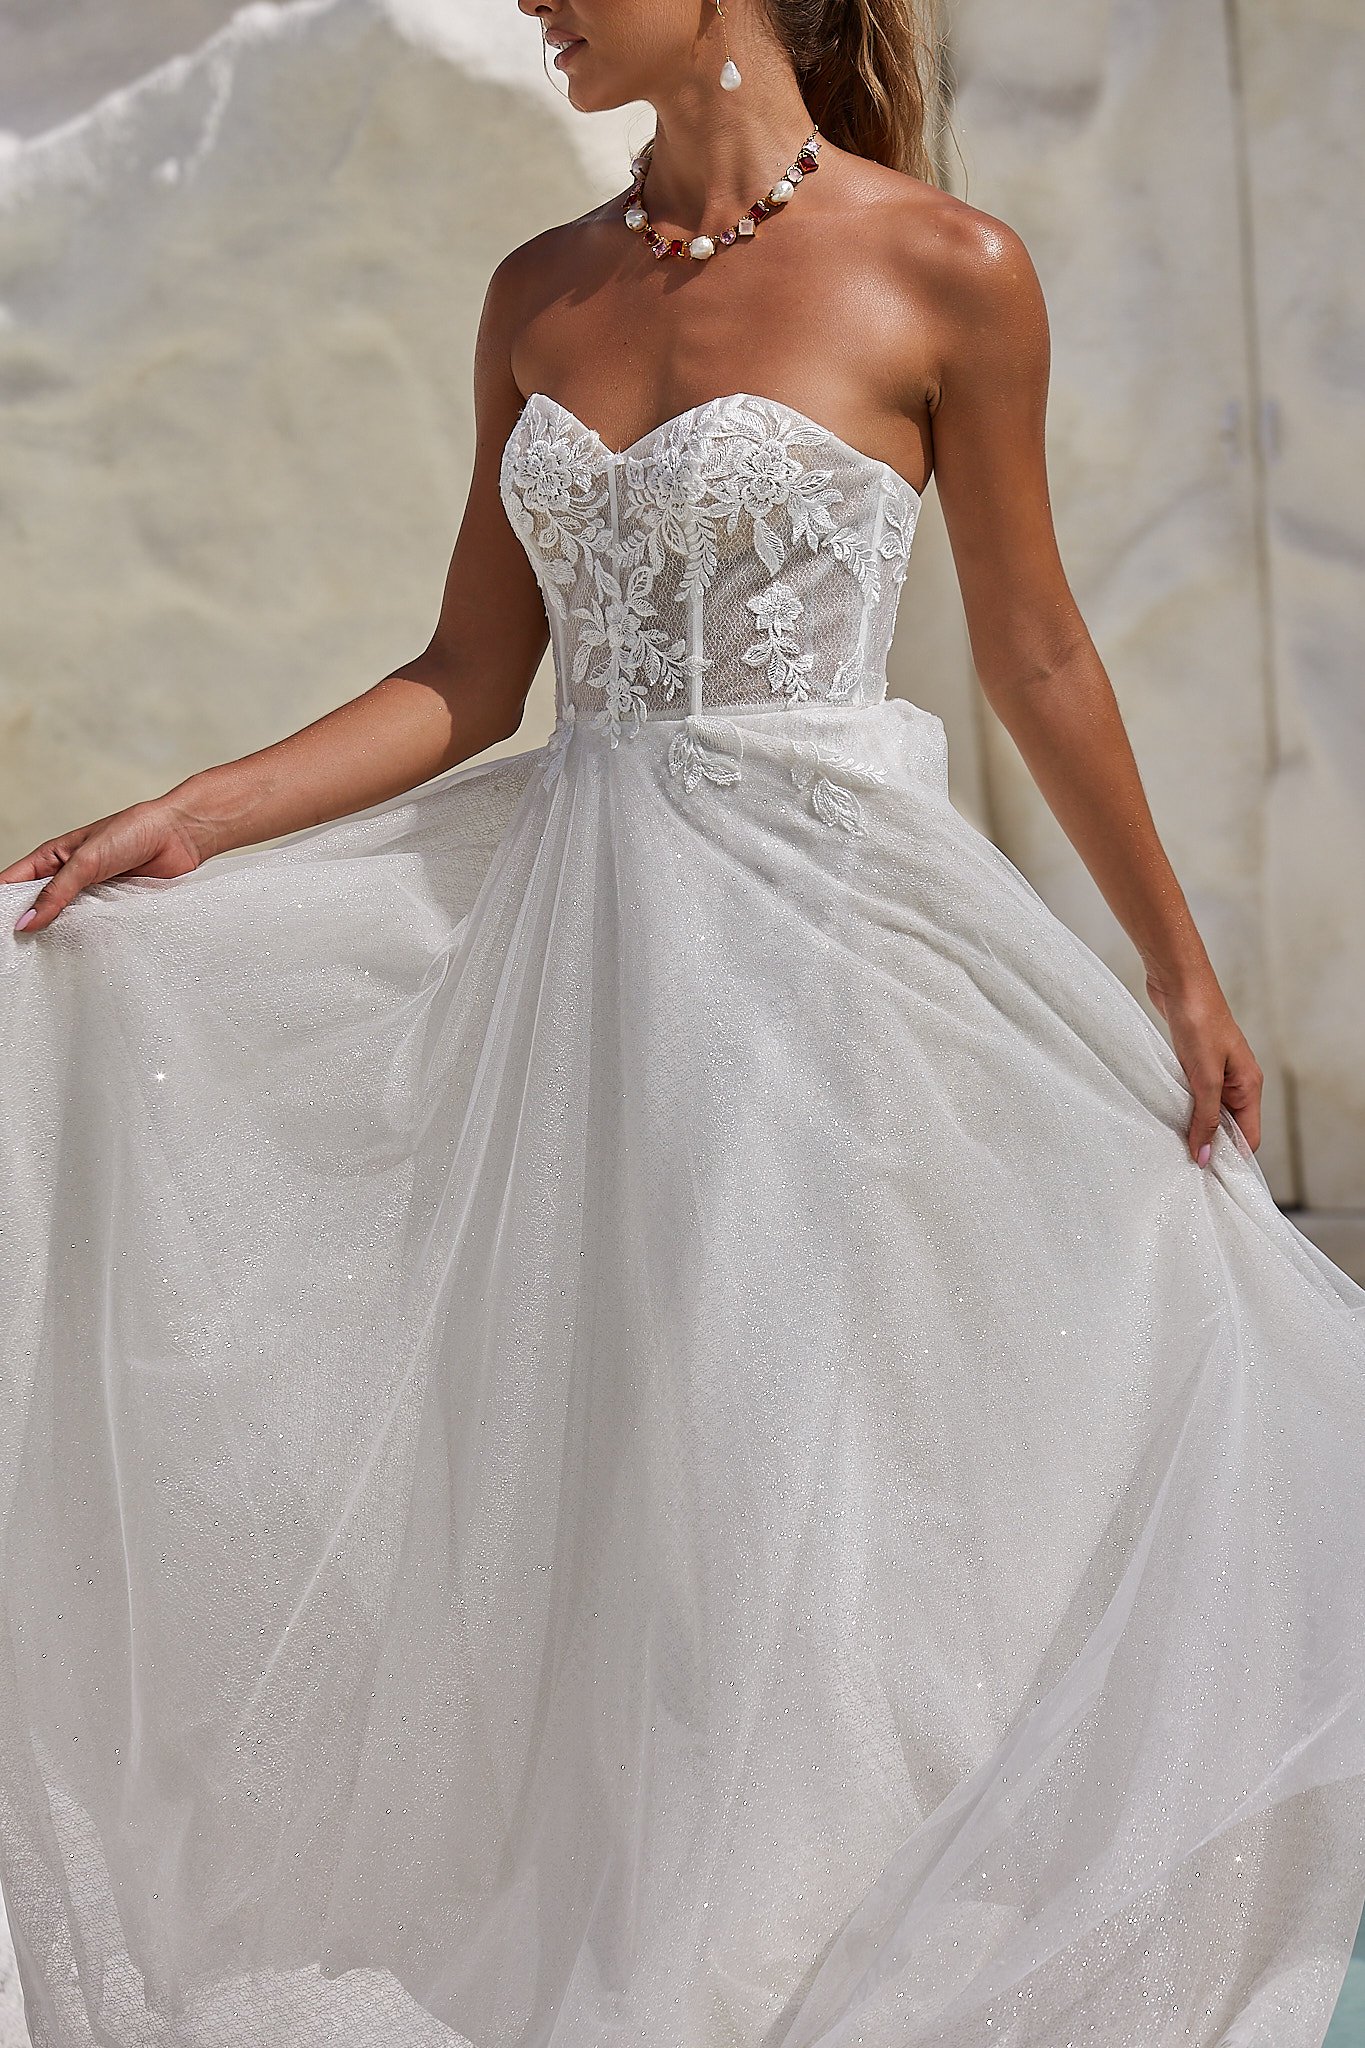 Tania Olsen Bridal wedding dress.jpg